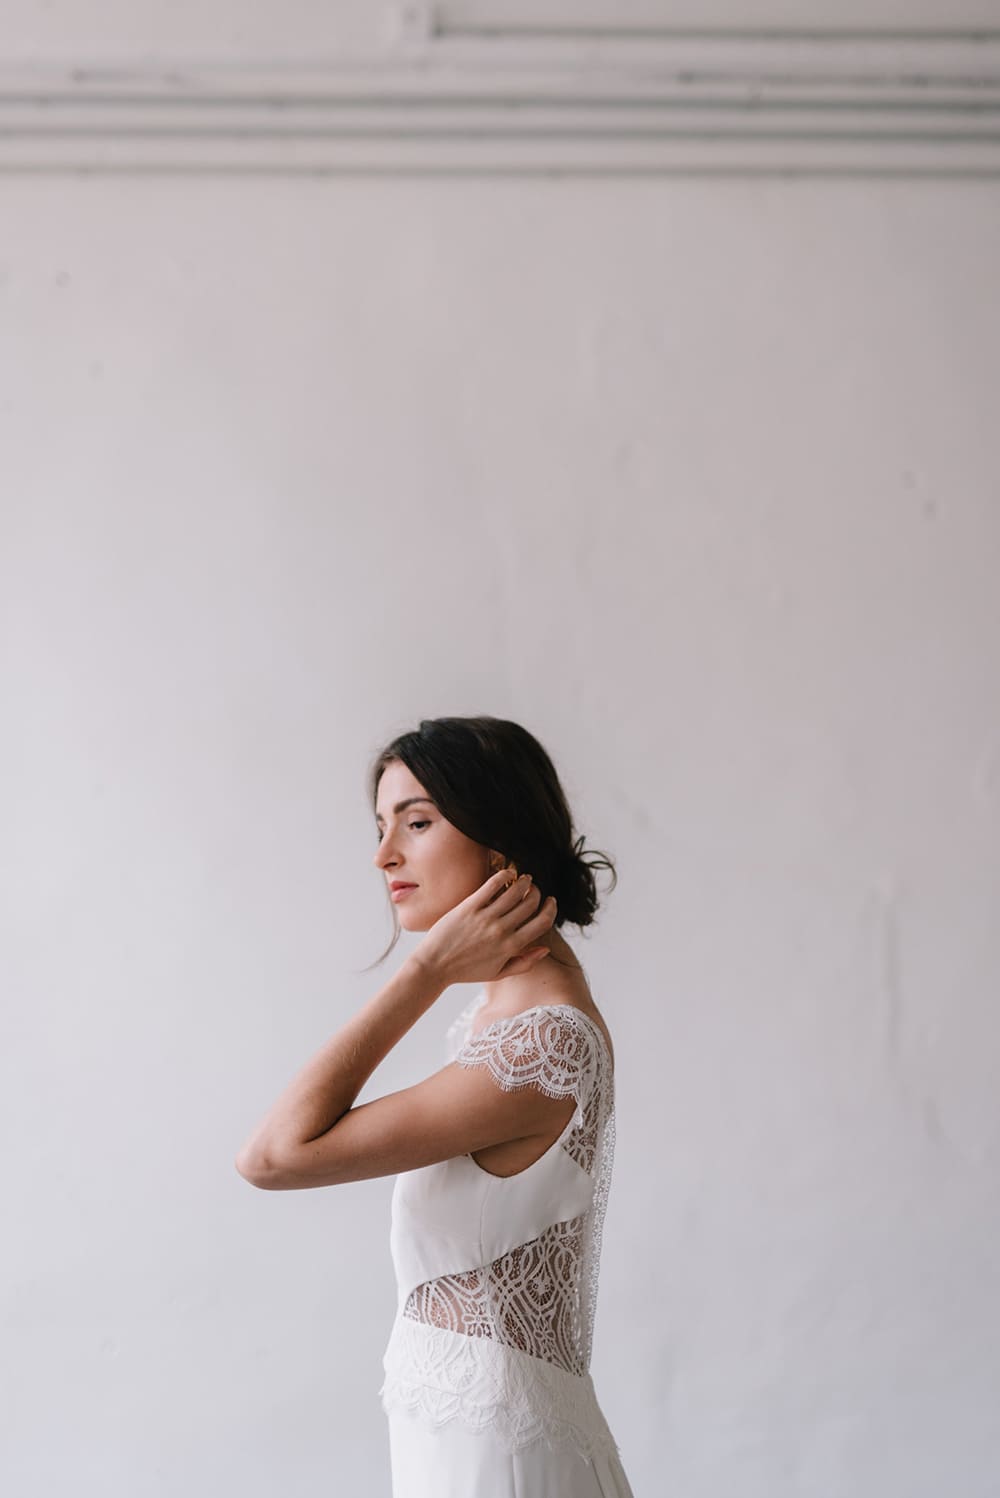 Robe de mariée KHAN : Aurélia Hoang collection 2018